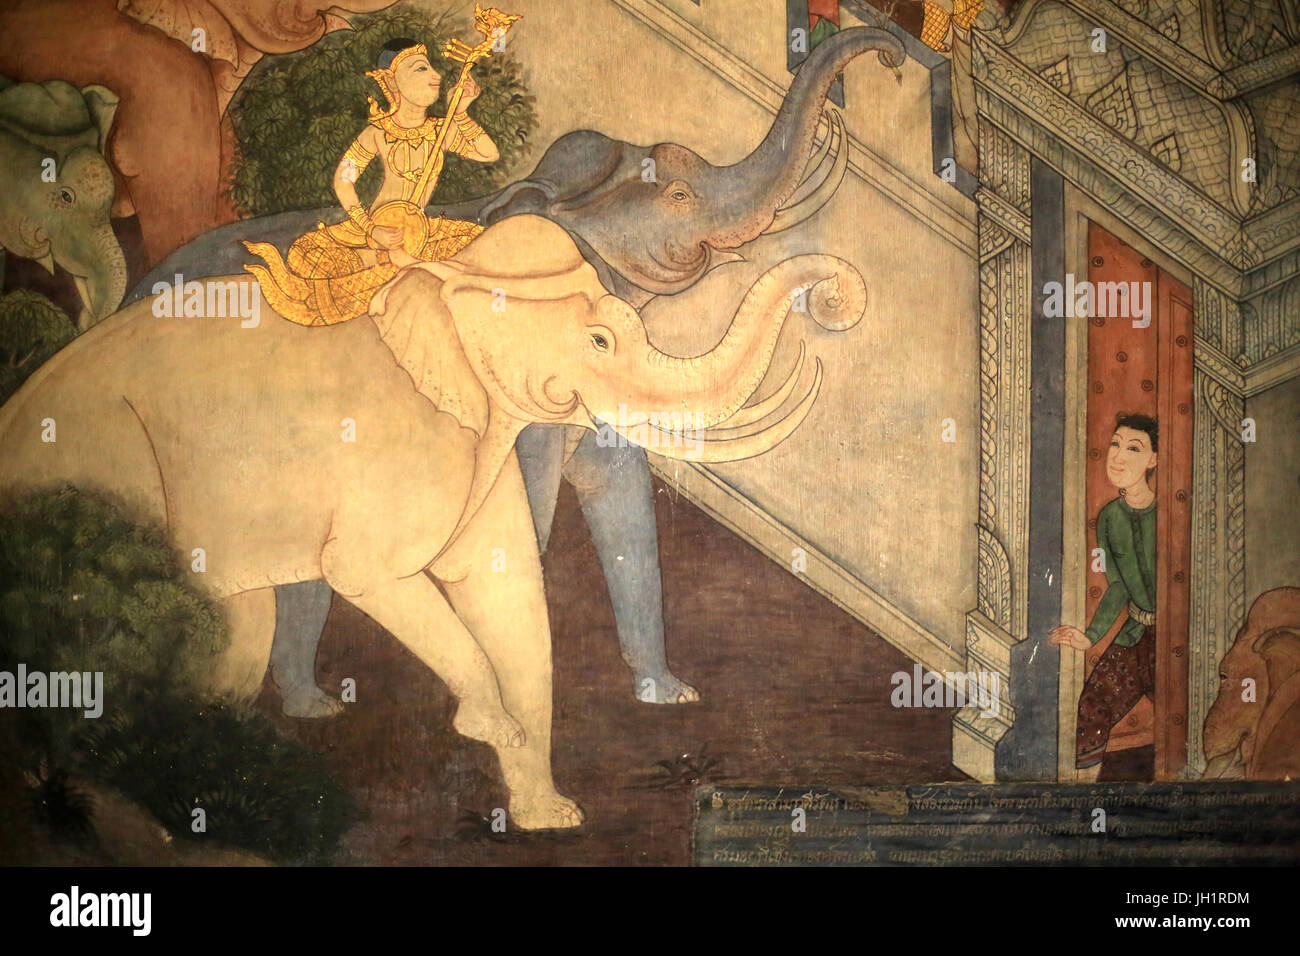 Prinz Rama. Wandbild Detail an Innenwänden der Vihara aus der Ära von König Rama III Darstellung das Ramakian. Wat Pho - Wat Phra Chettuphon. 1788. bang Stockfoto